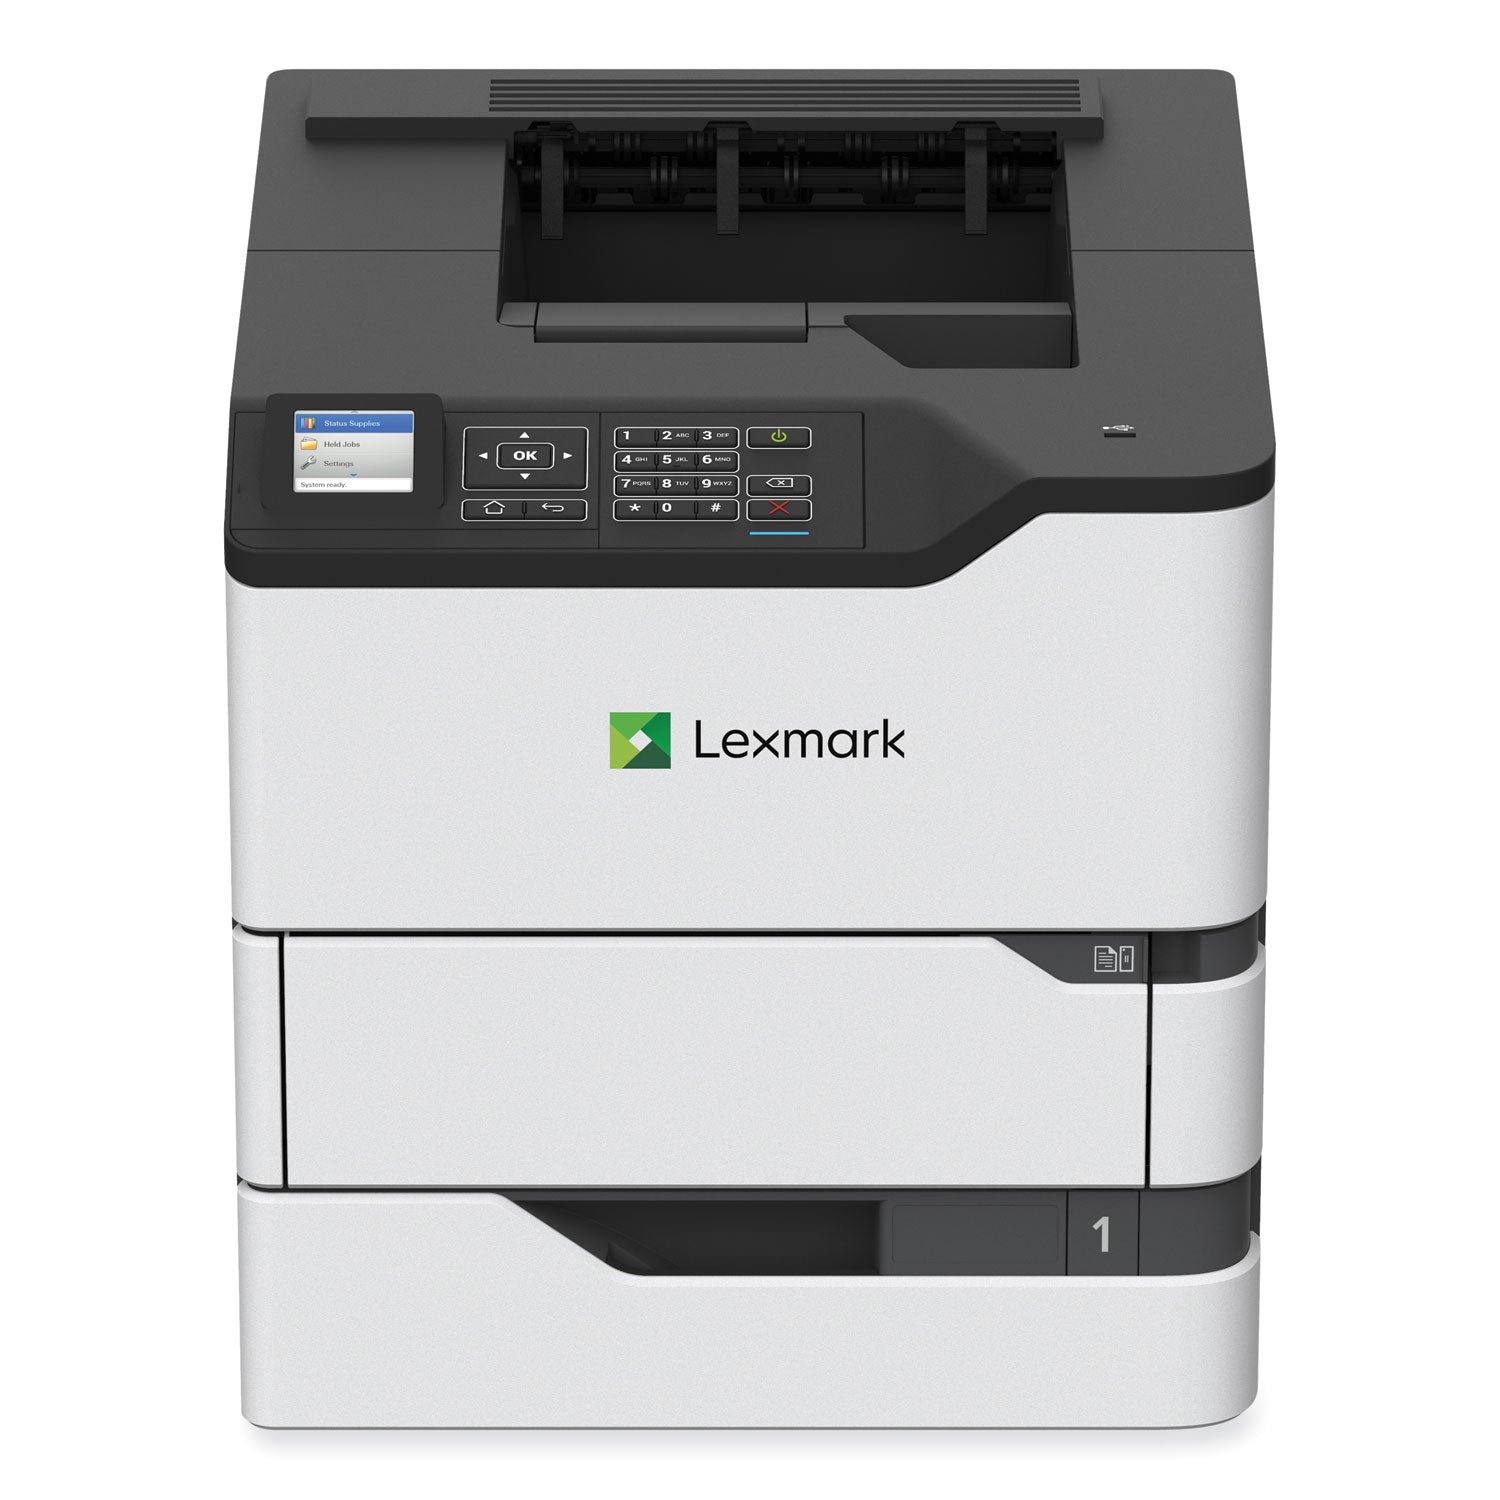 ms821n-laser-printer_lex50g0050 - 1